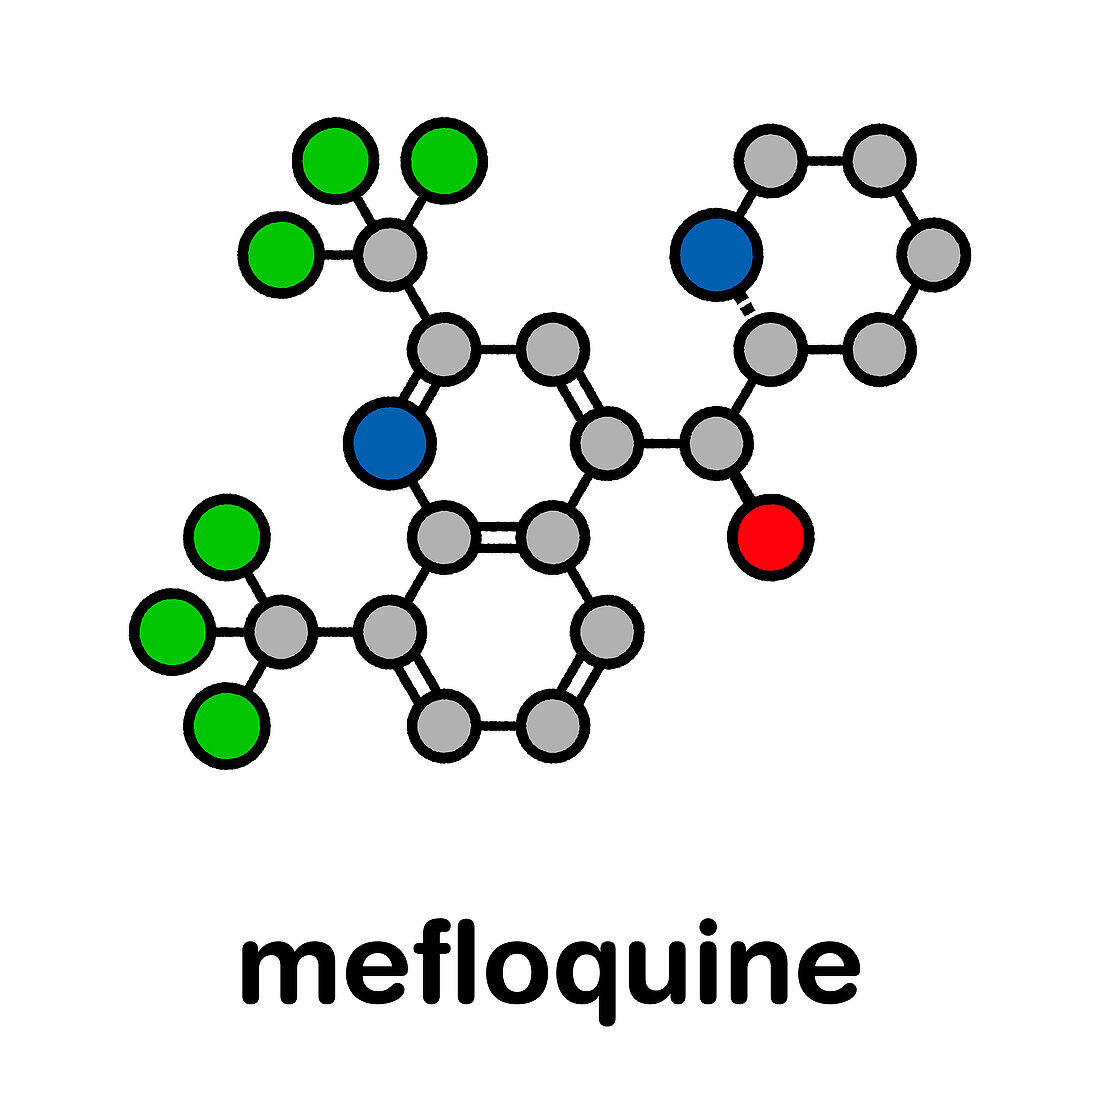 Mefloquine malaria drug, molecular model